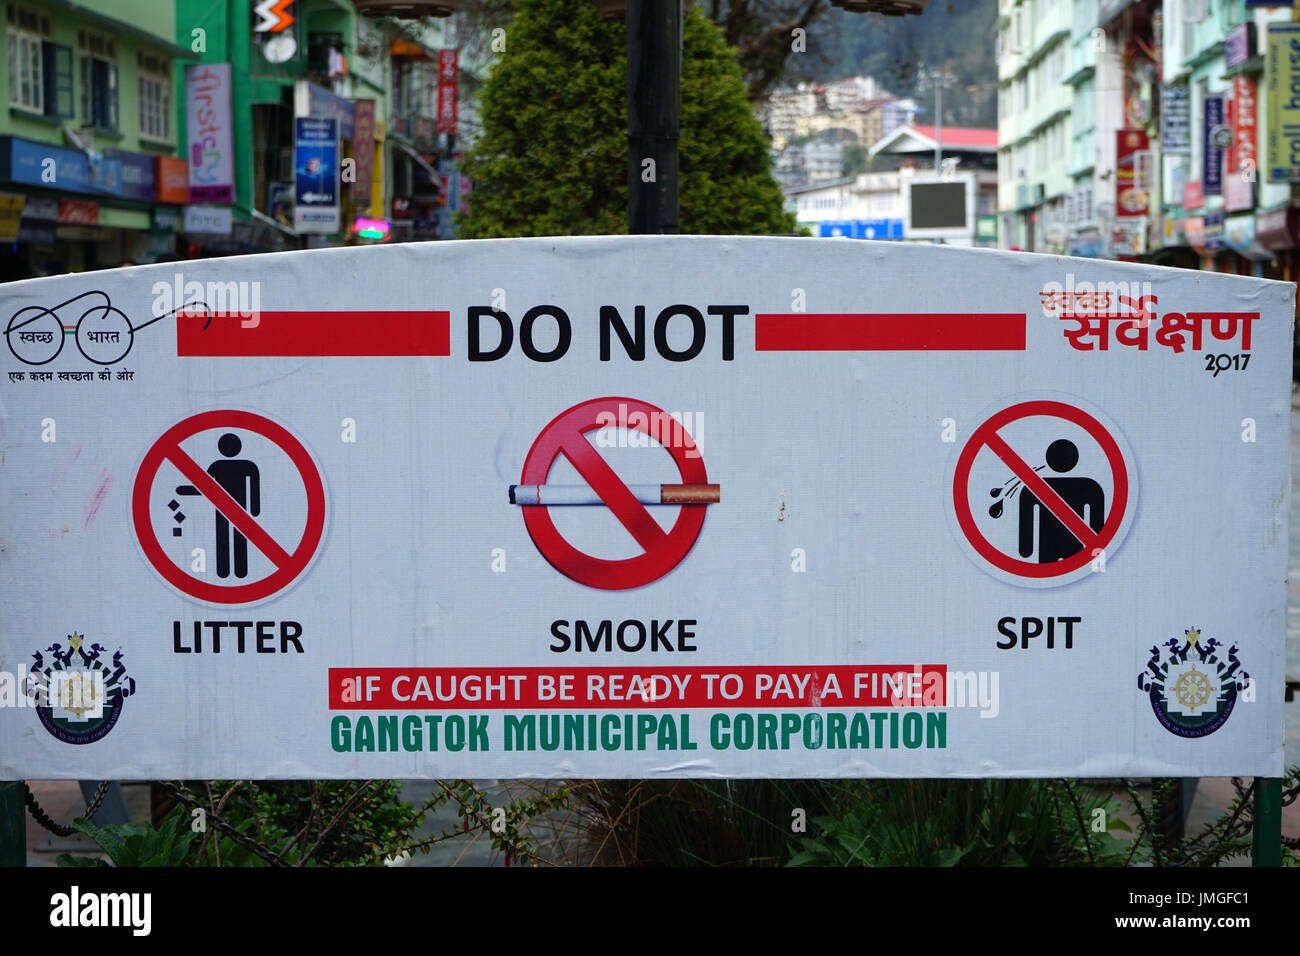 Billboard against littering, smoking, spitting, Town Gangtok, Sikkim, India Stock Photo